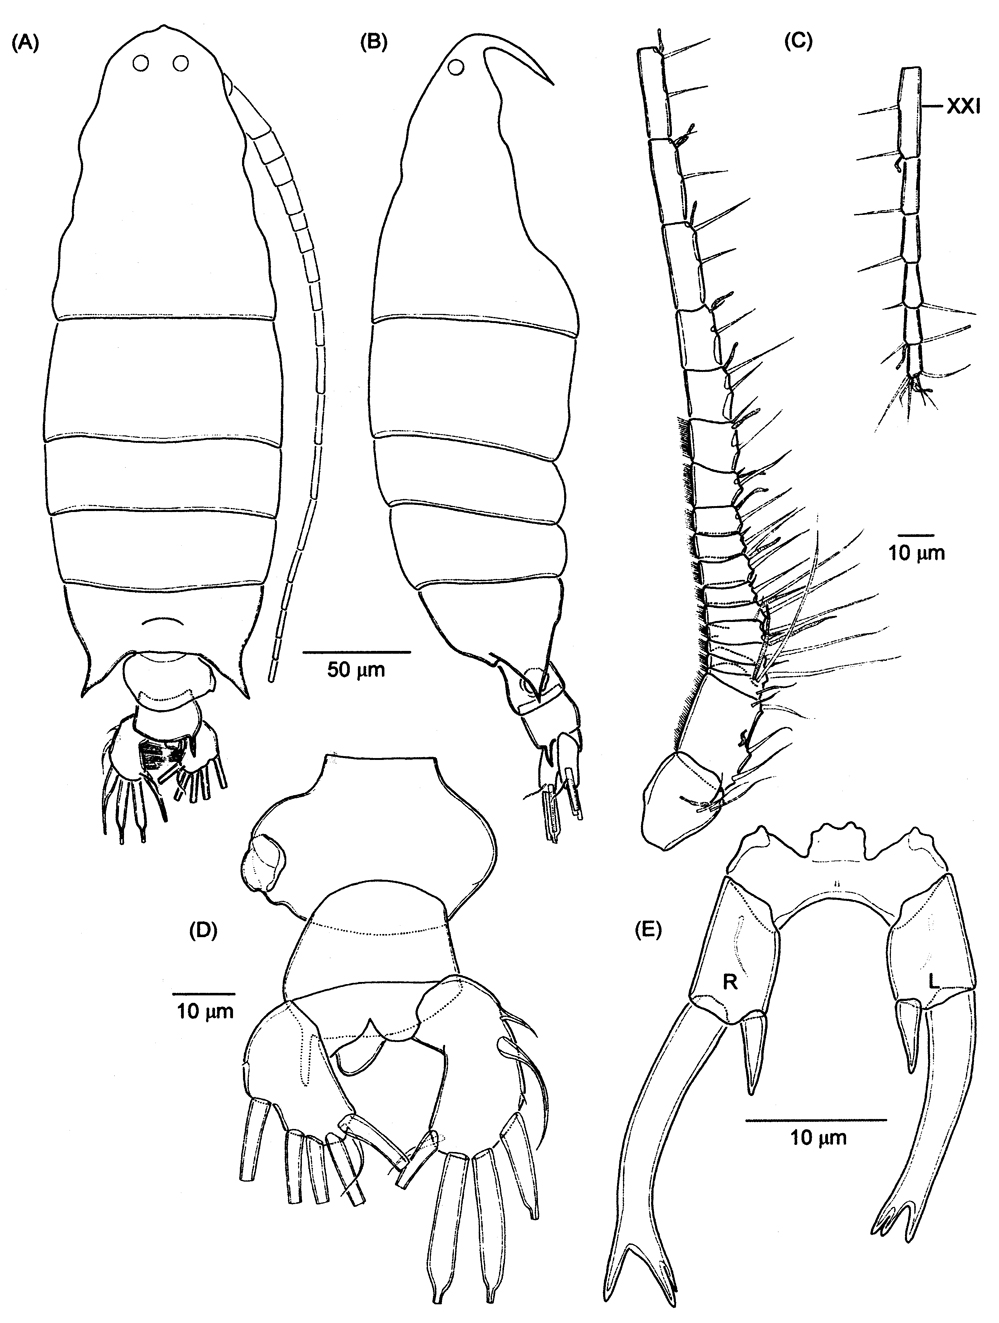 Espce Labidocera acutifrons - Planche 12 de figures morphologiques